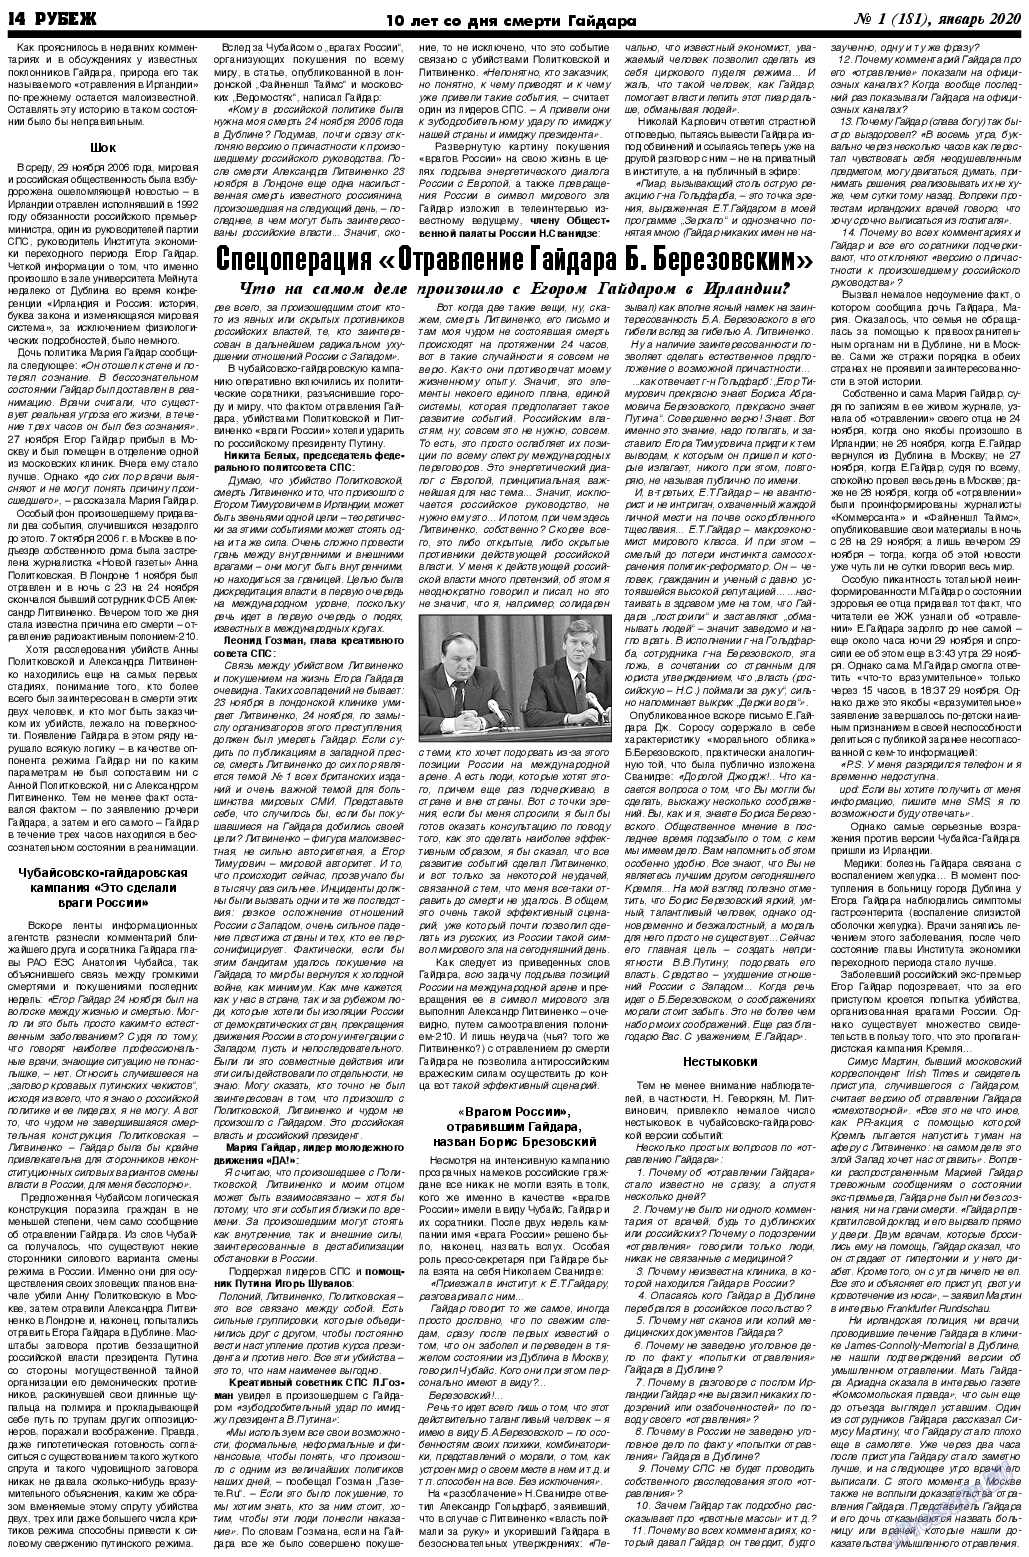 Рубеж, газета. 2020 №1 стр.14